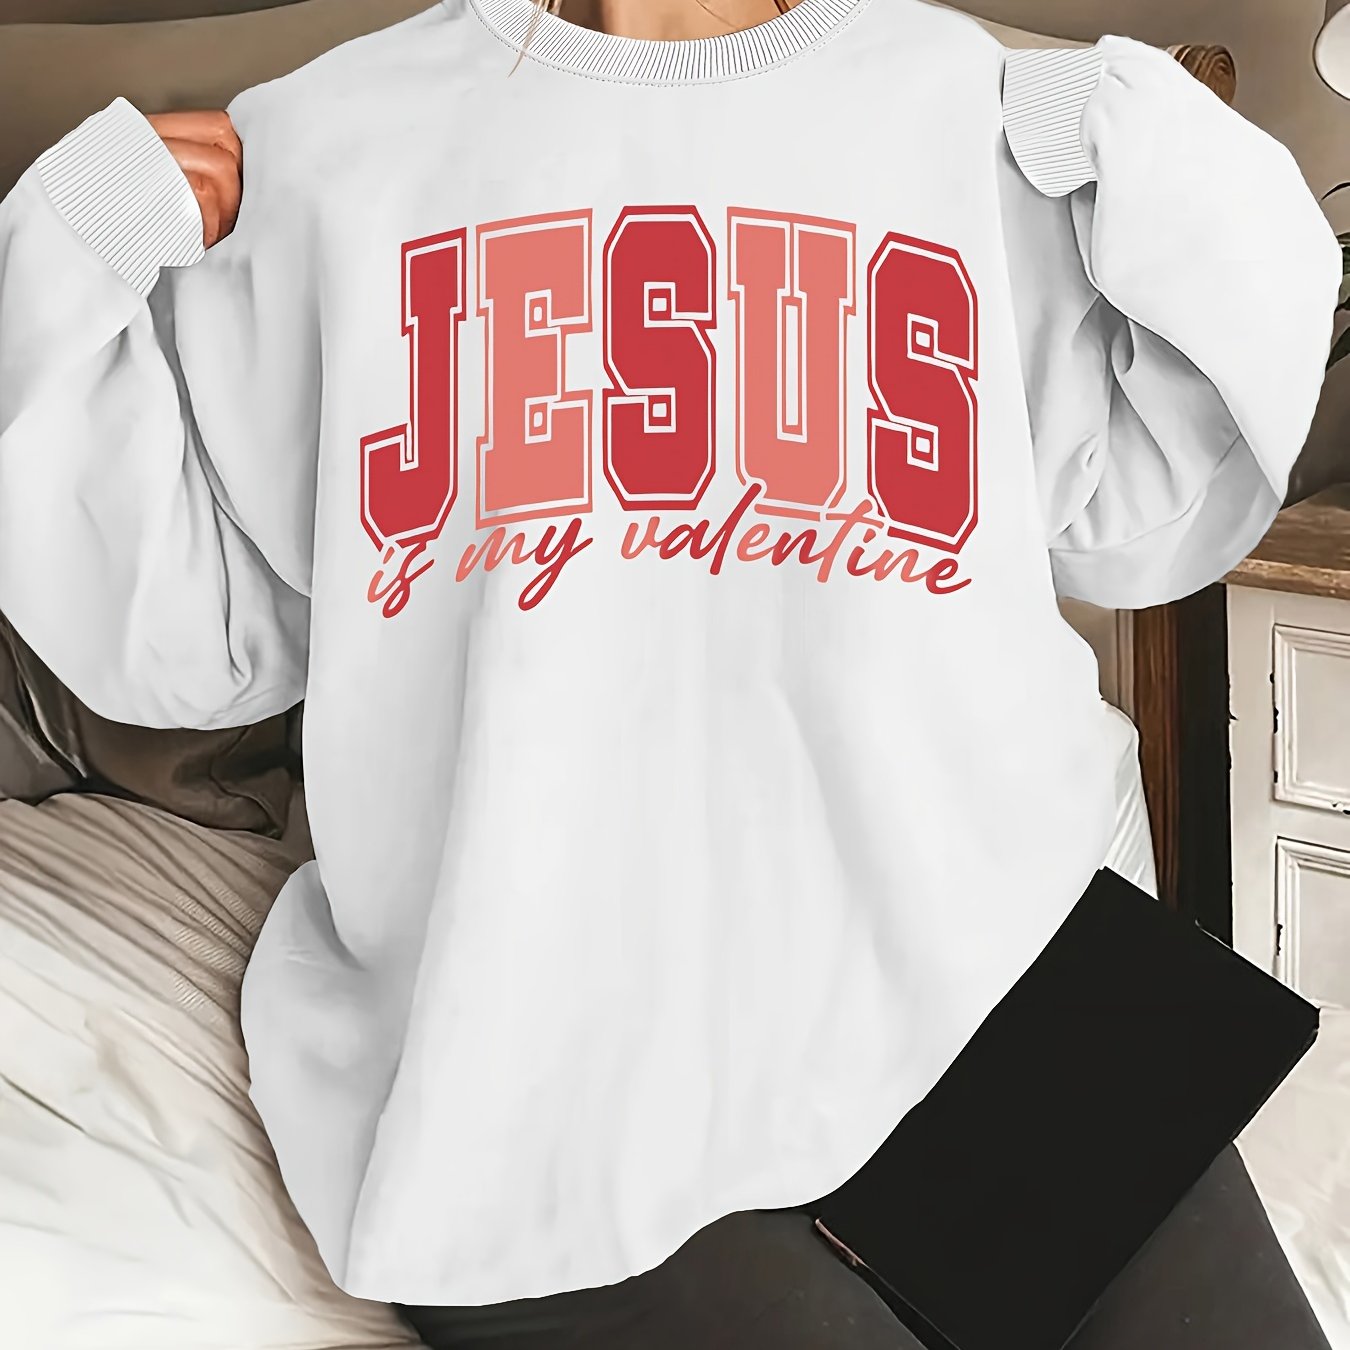 Jesus Is My Valentine Plus Size Women's Christian Pullover Sweatshirt claimedbygoddesigns